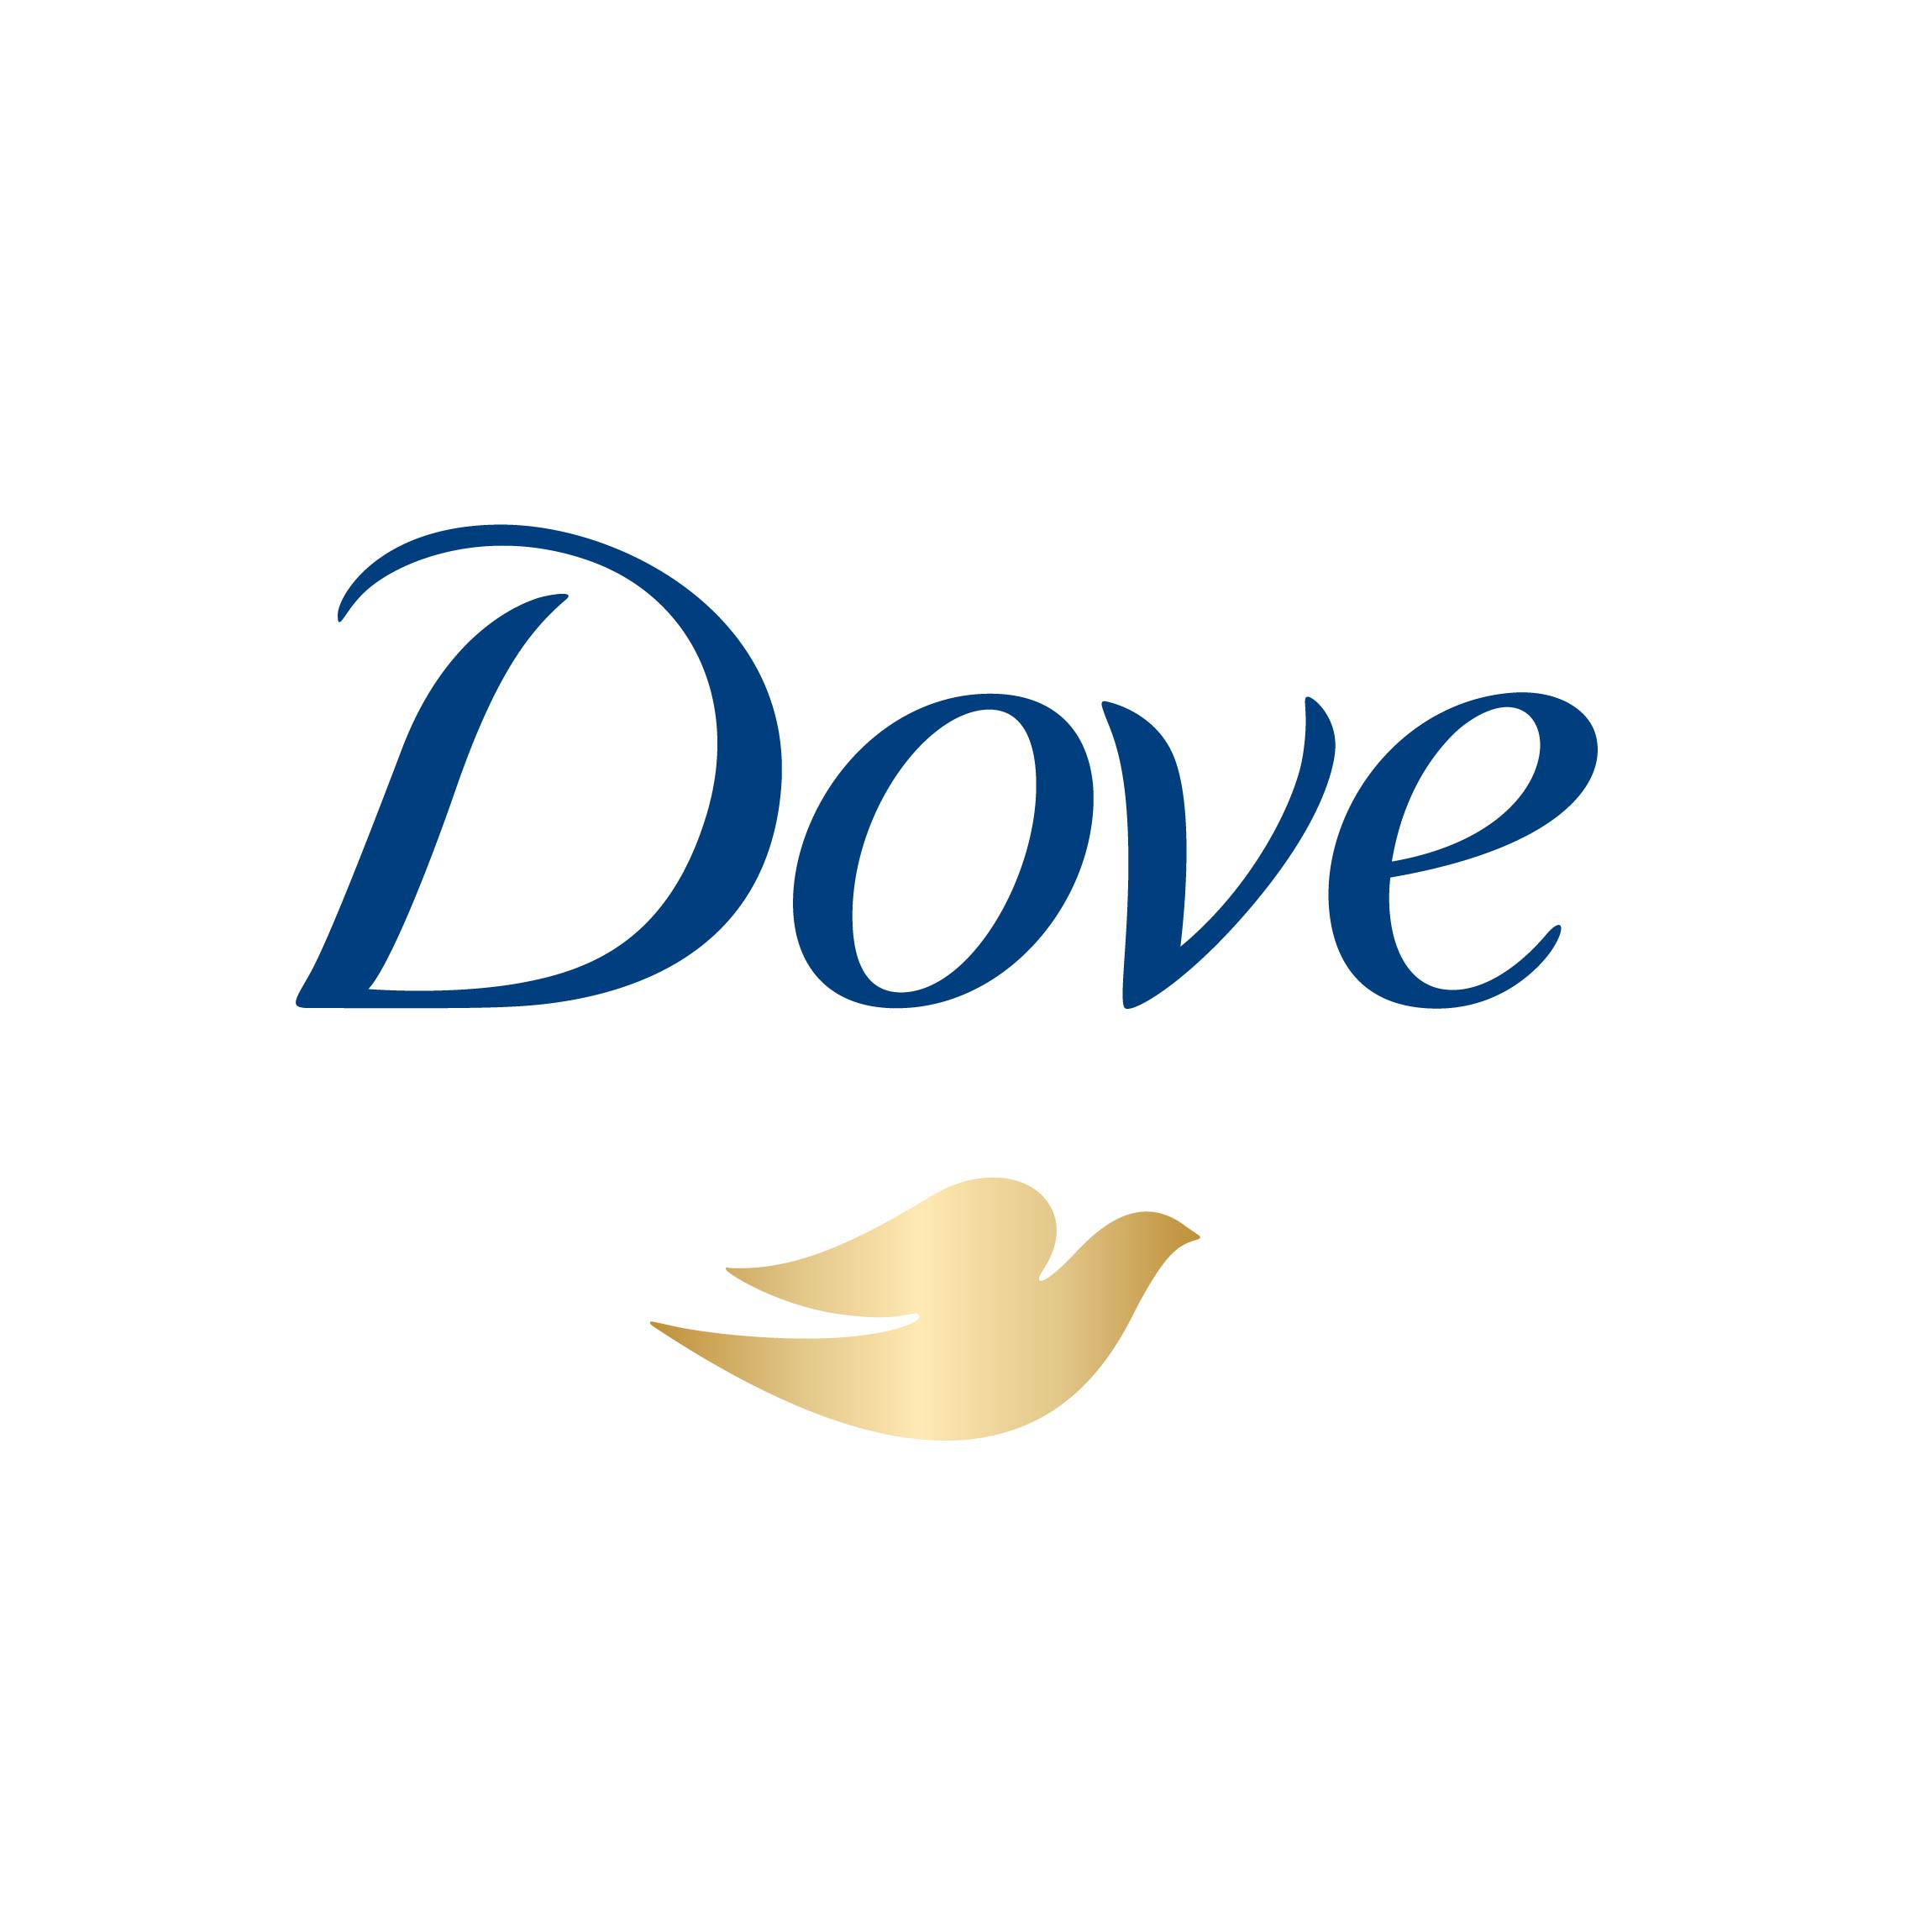 Brand Dove